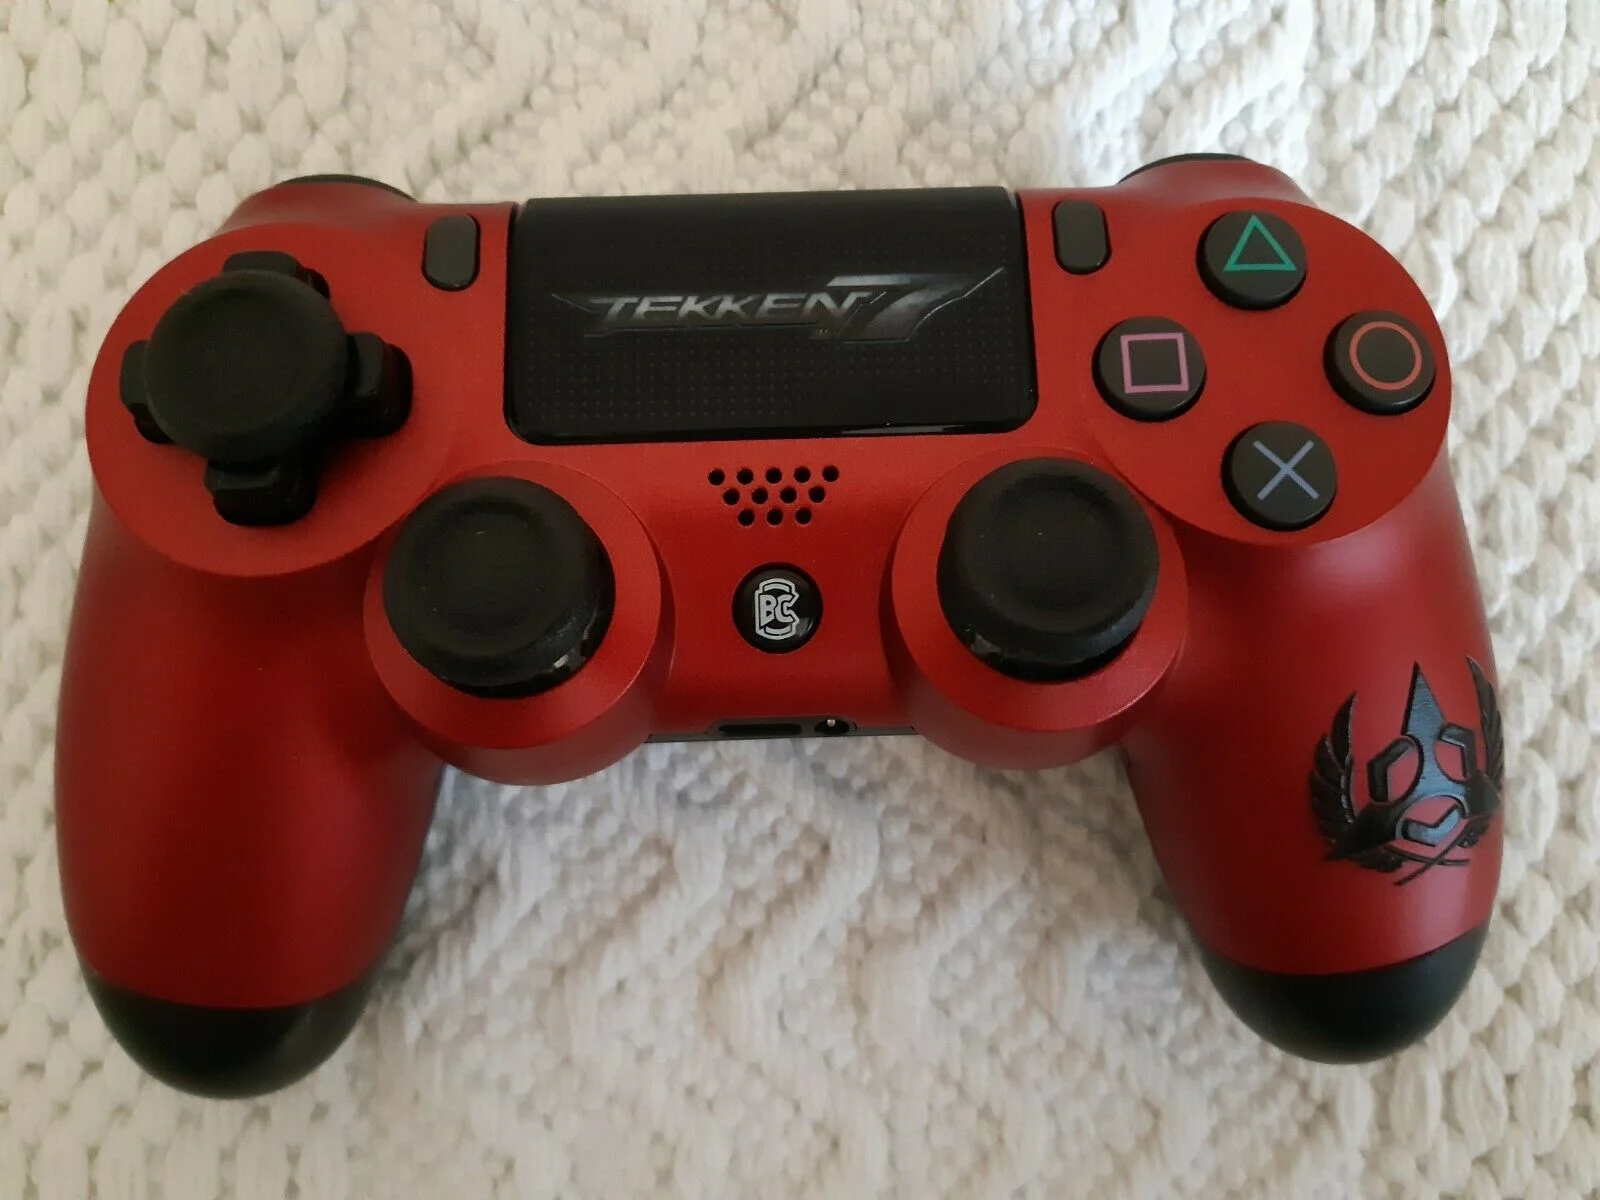  Sony PlayStation 4 Tekken 7 Controller